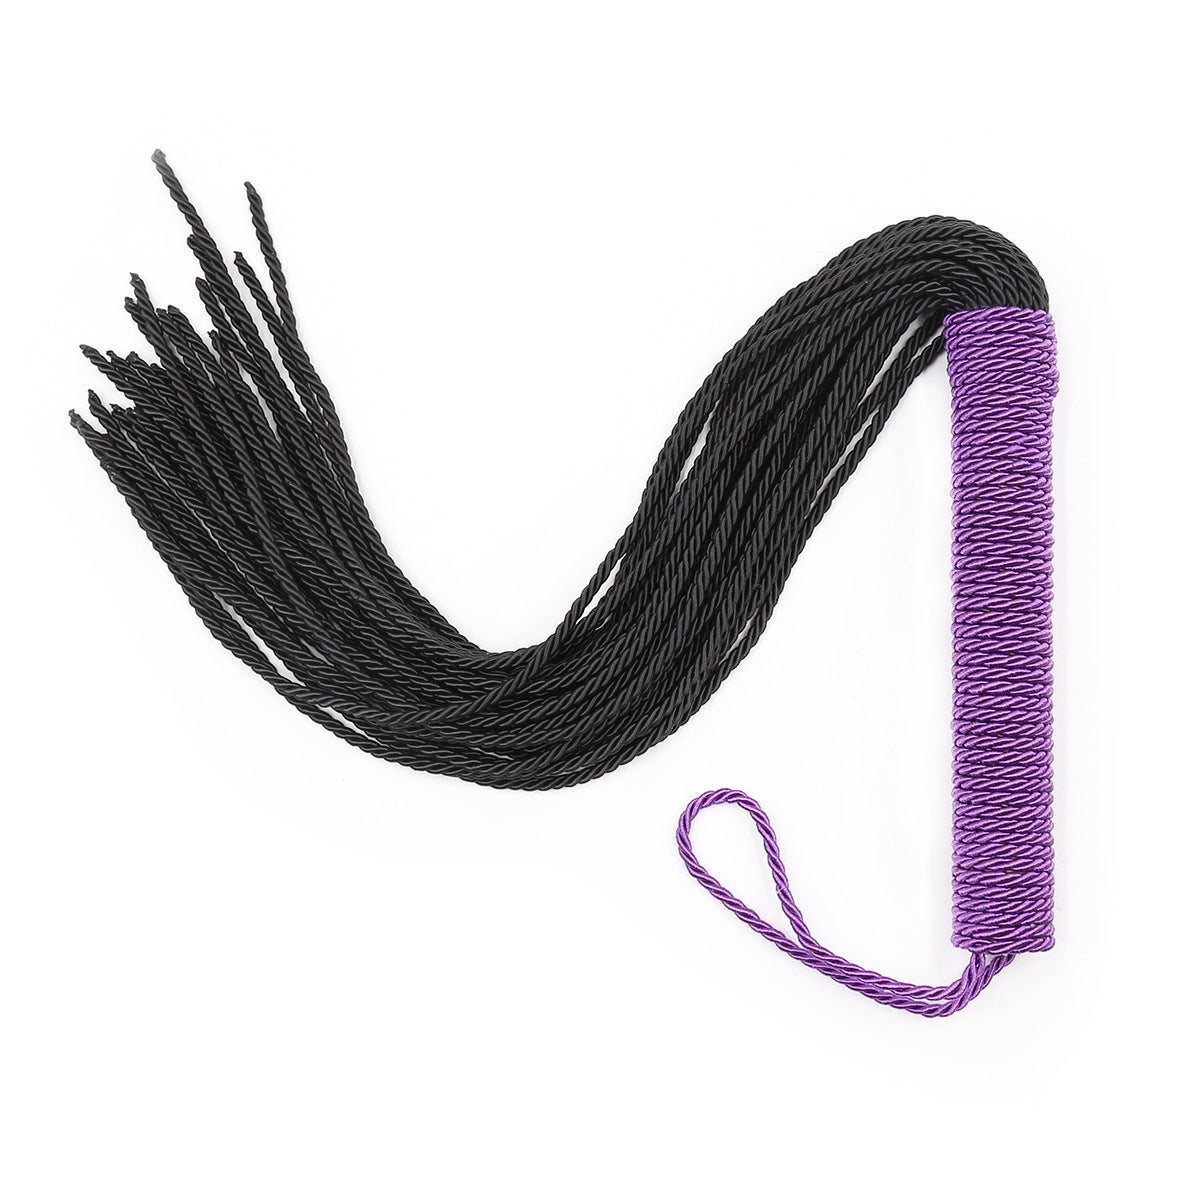 50cm Faux Leather Tassels Bondage Flogger - Purple/Black